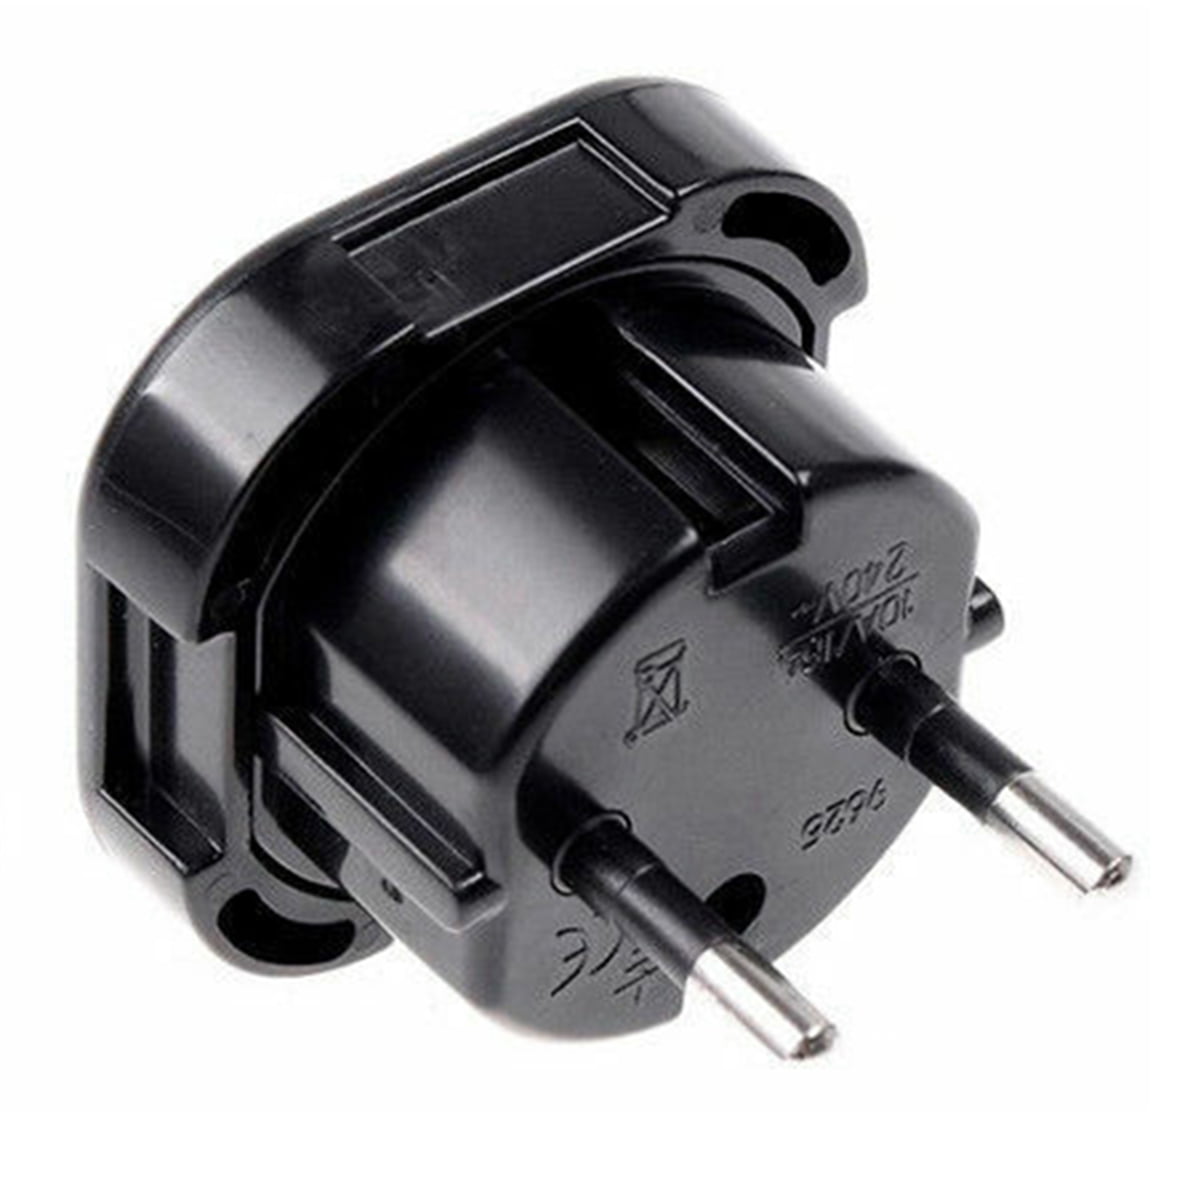 PLUG EURO-UK CONVERTER BLACK Connectors Electrical 